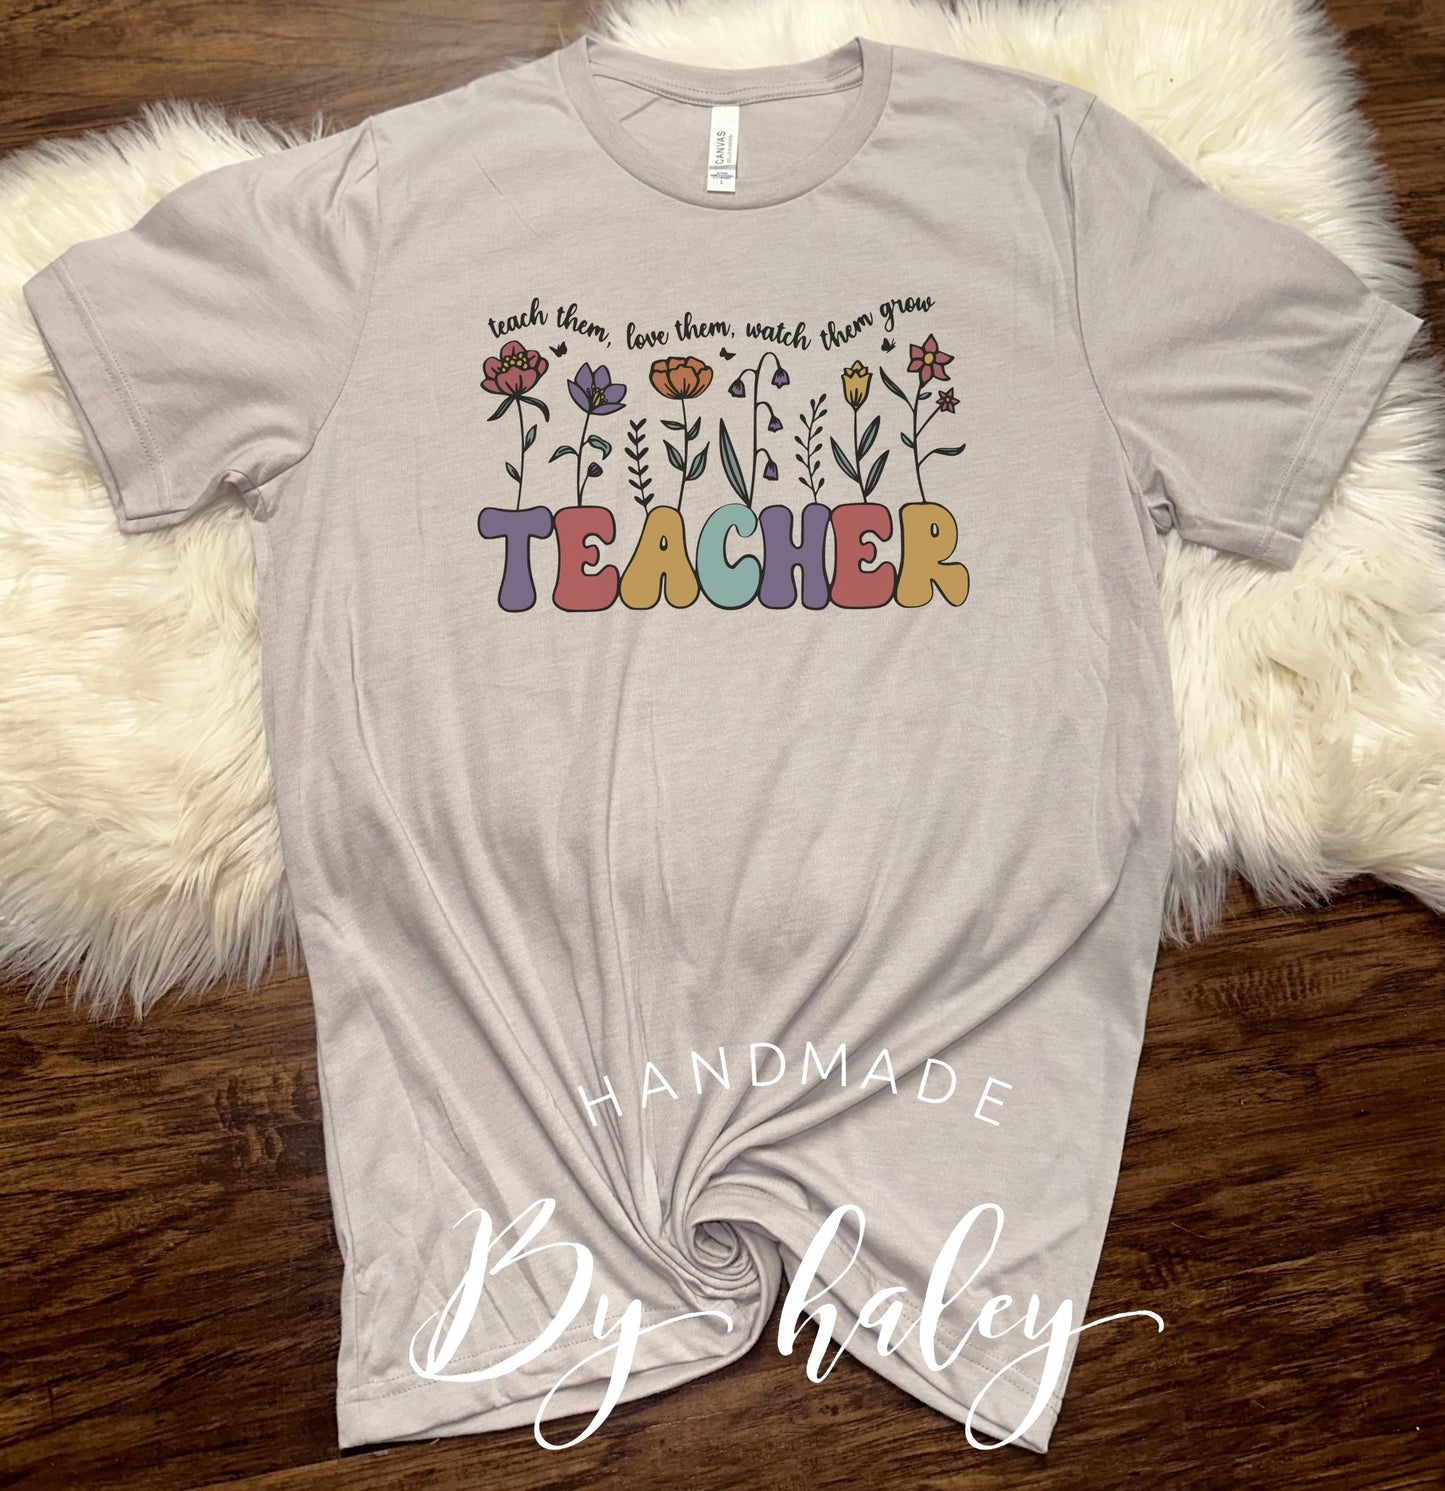 Retro Teacher T-Shirt